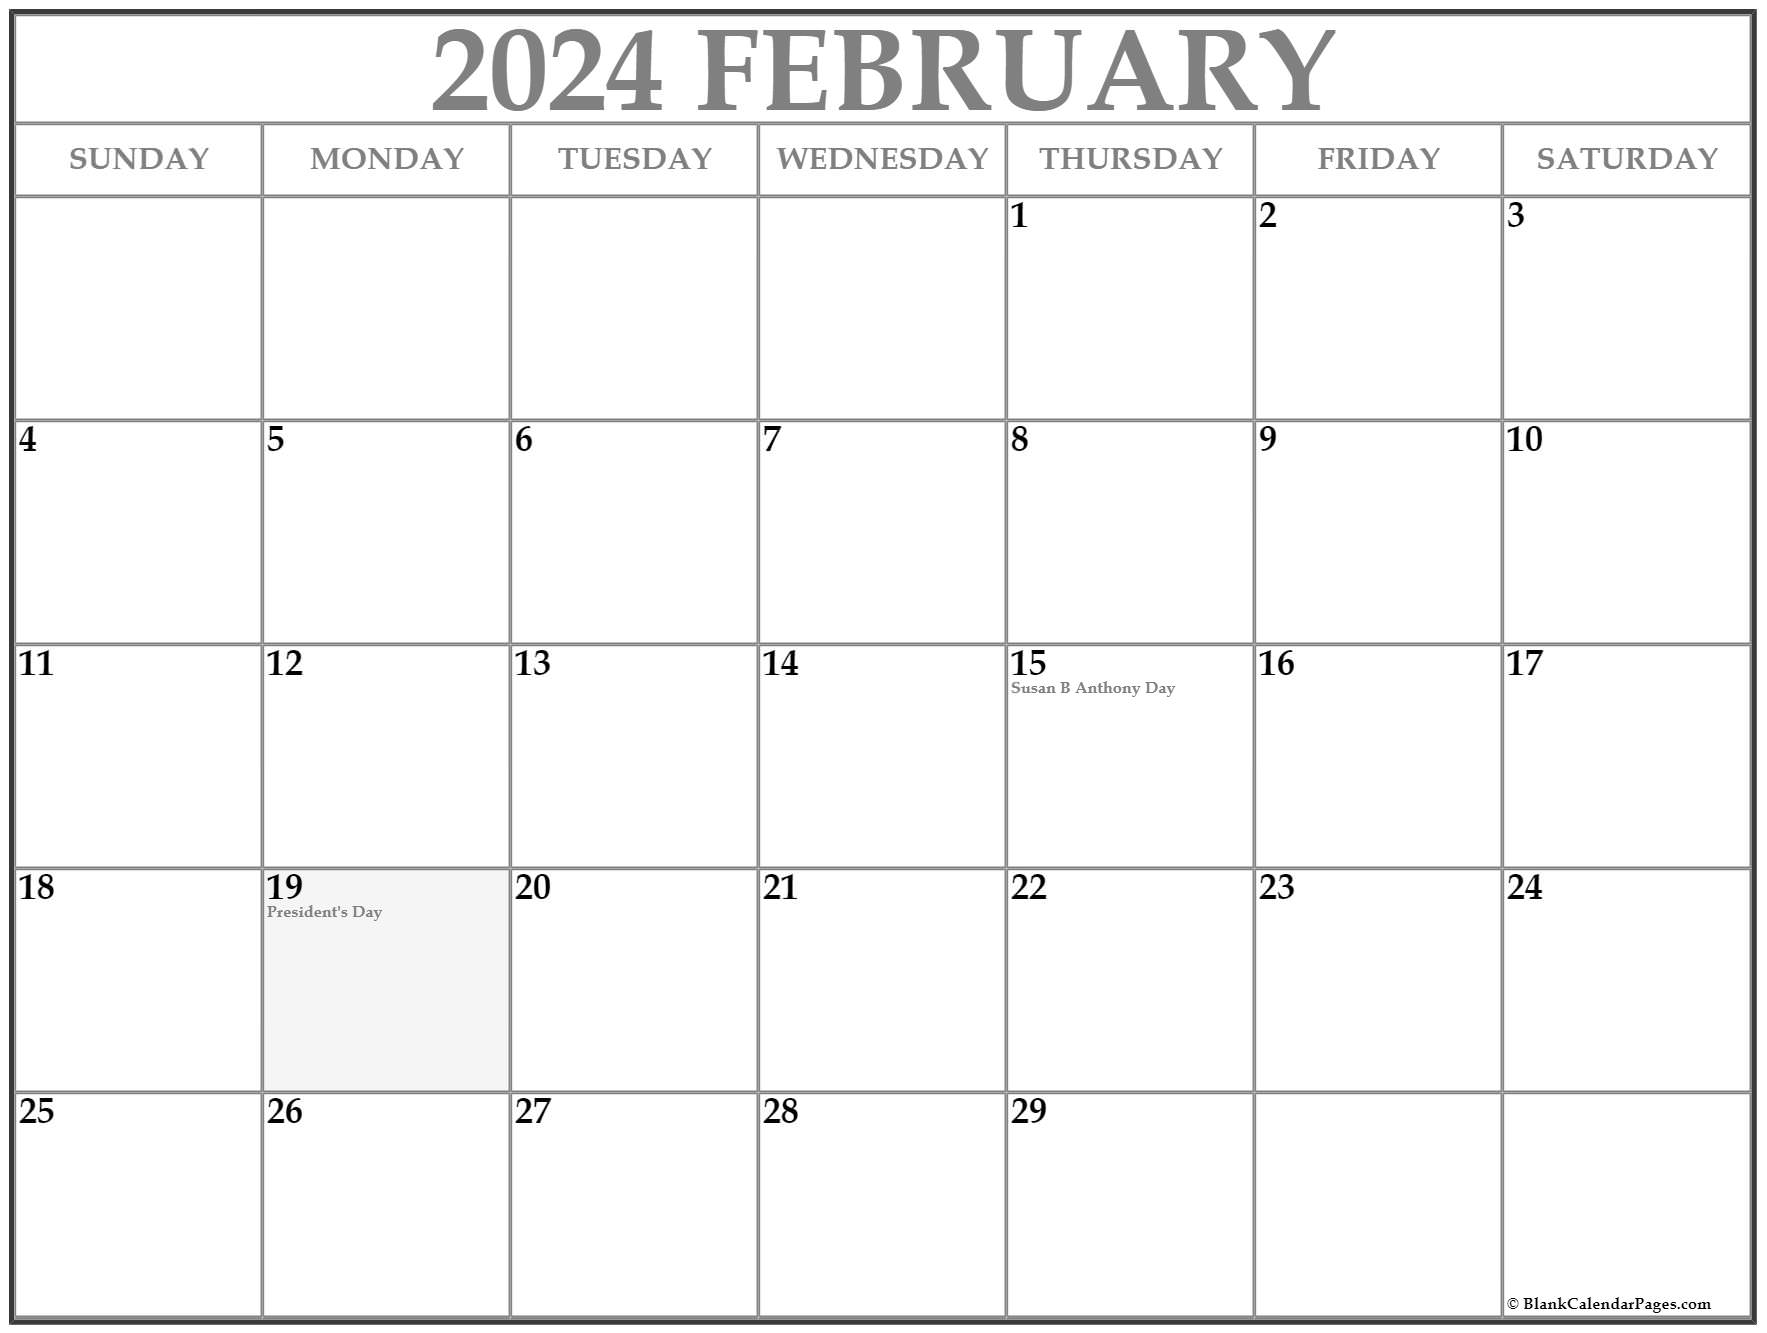 2024 February Calendar With National Holidays Dates 2021 Fredi Caresse